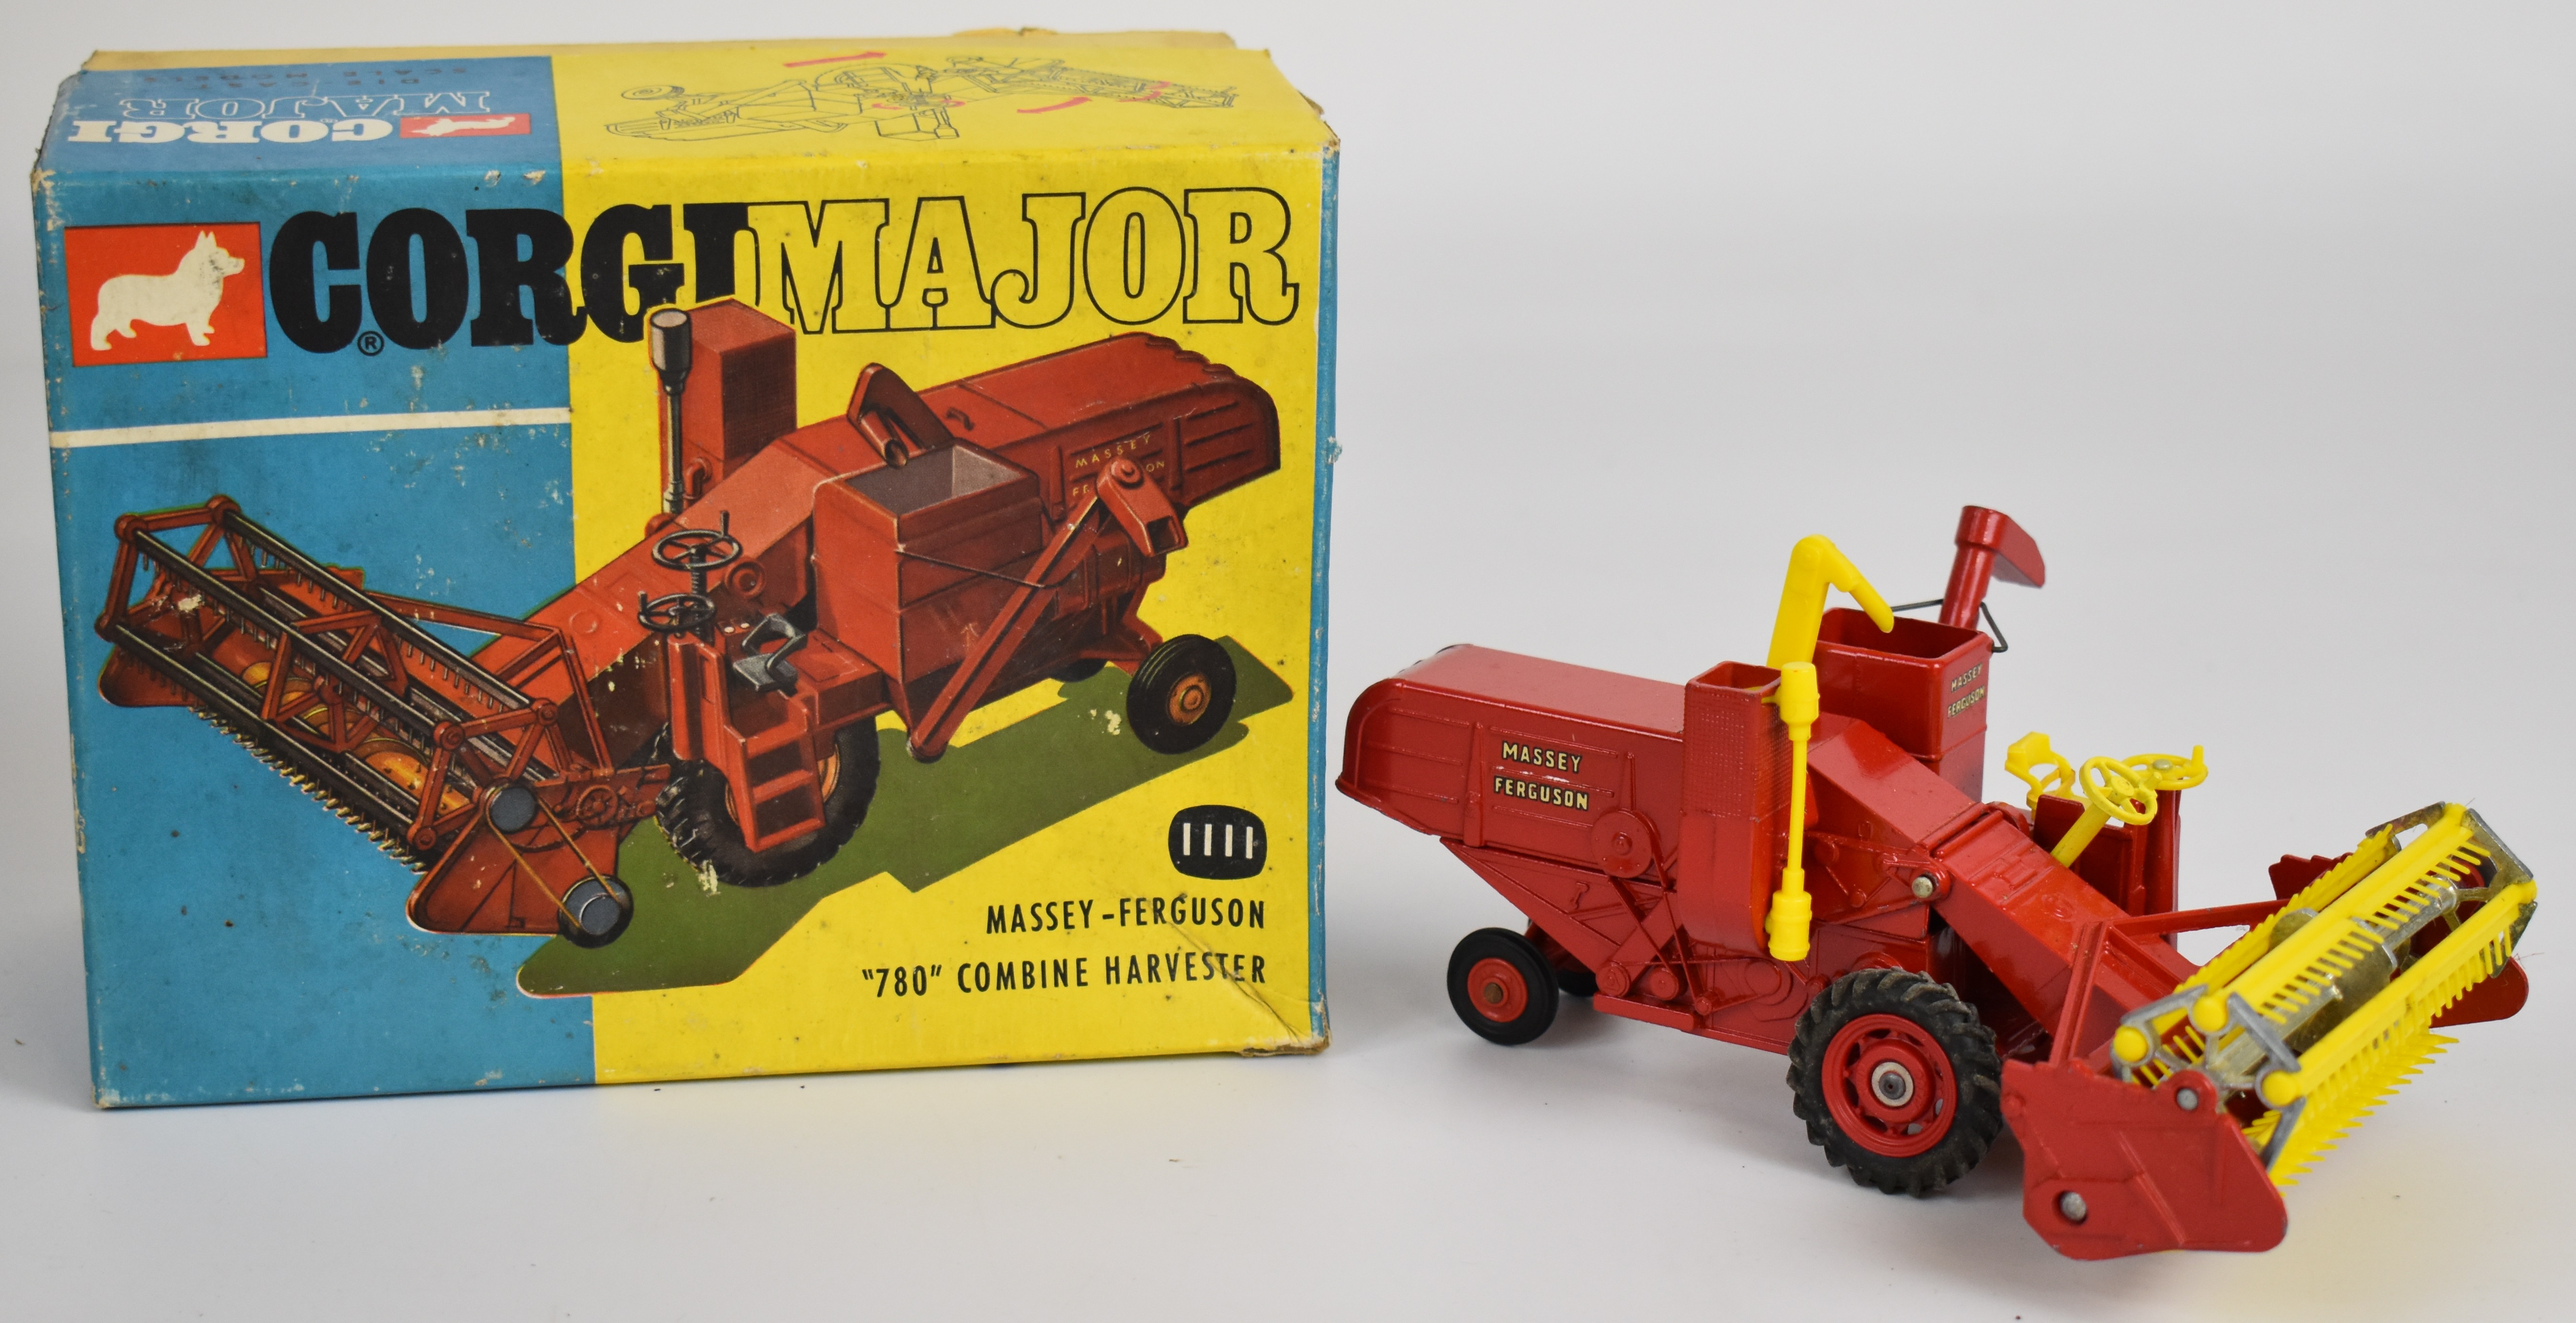 Corgi Major Toys diecast model Massey-Ferguson '780' Combine Harvester, 1111, in original box.